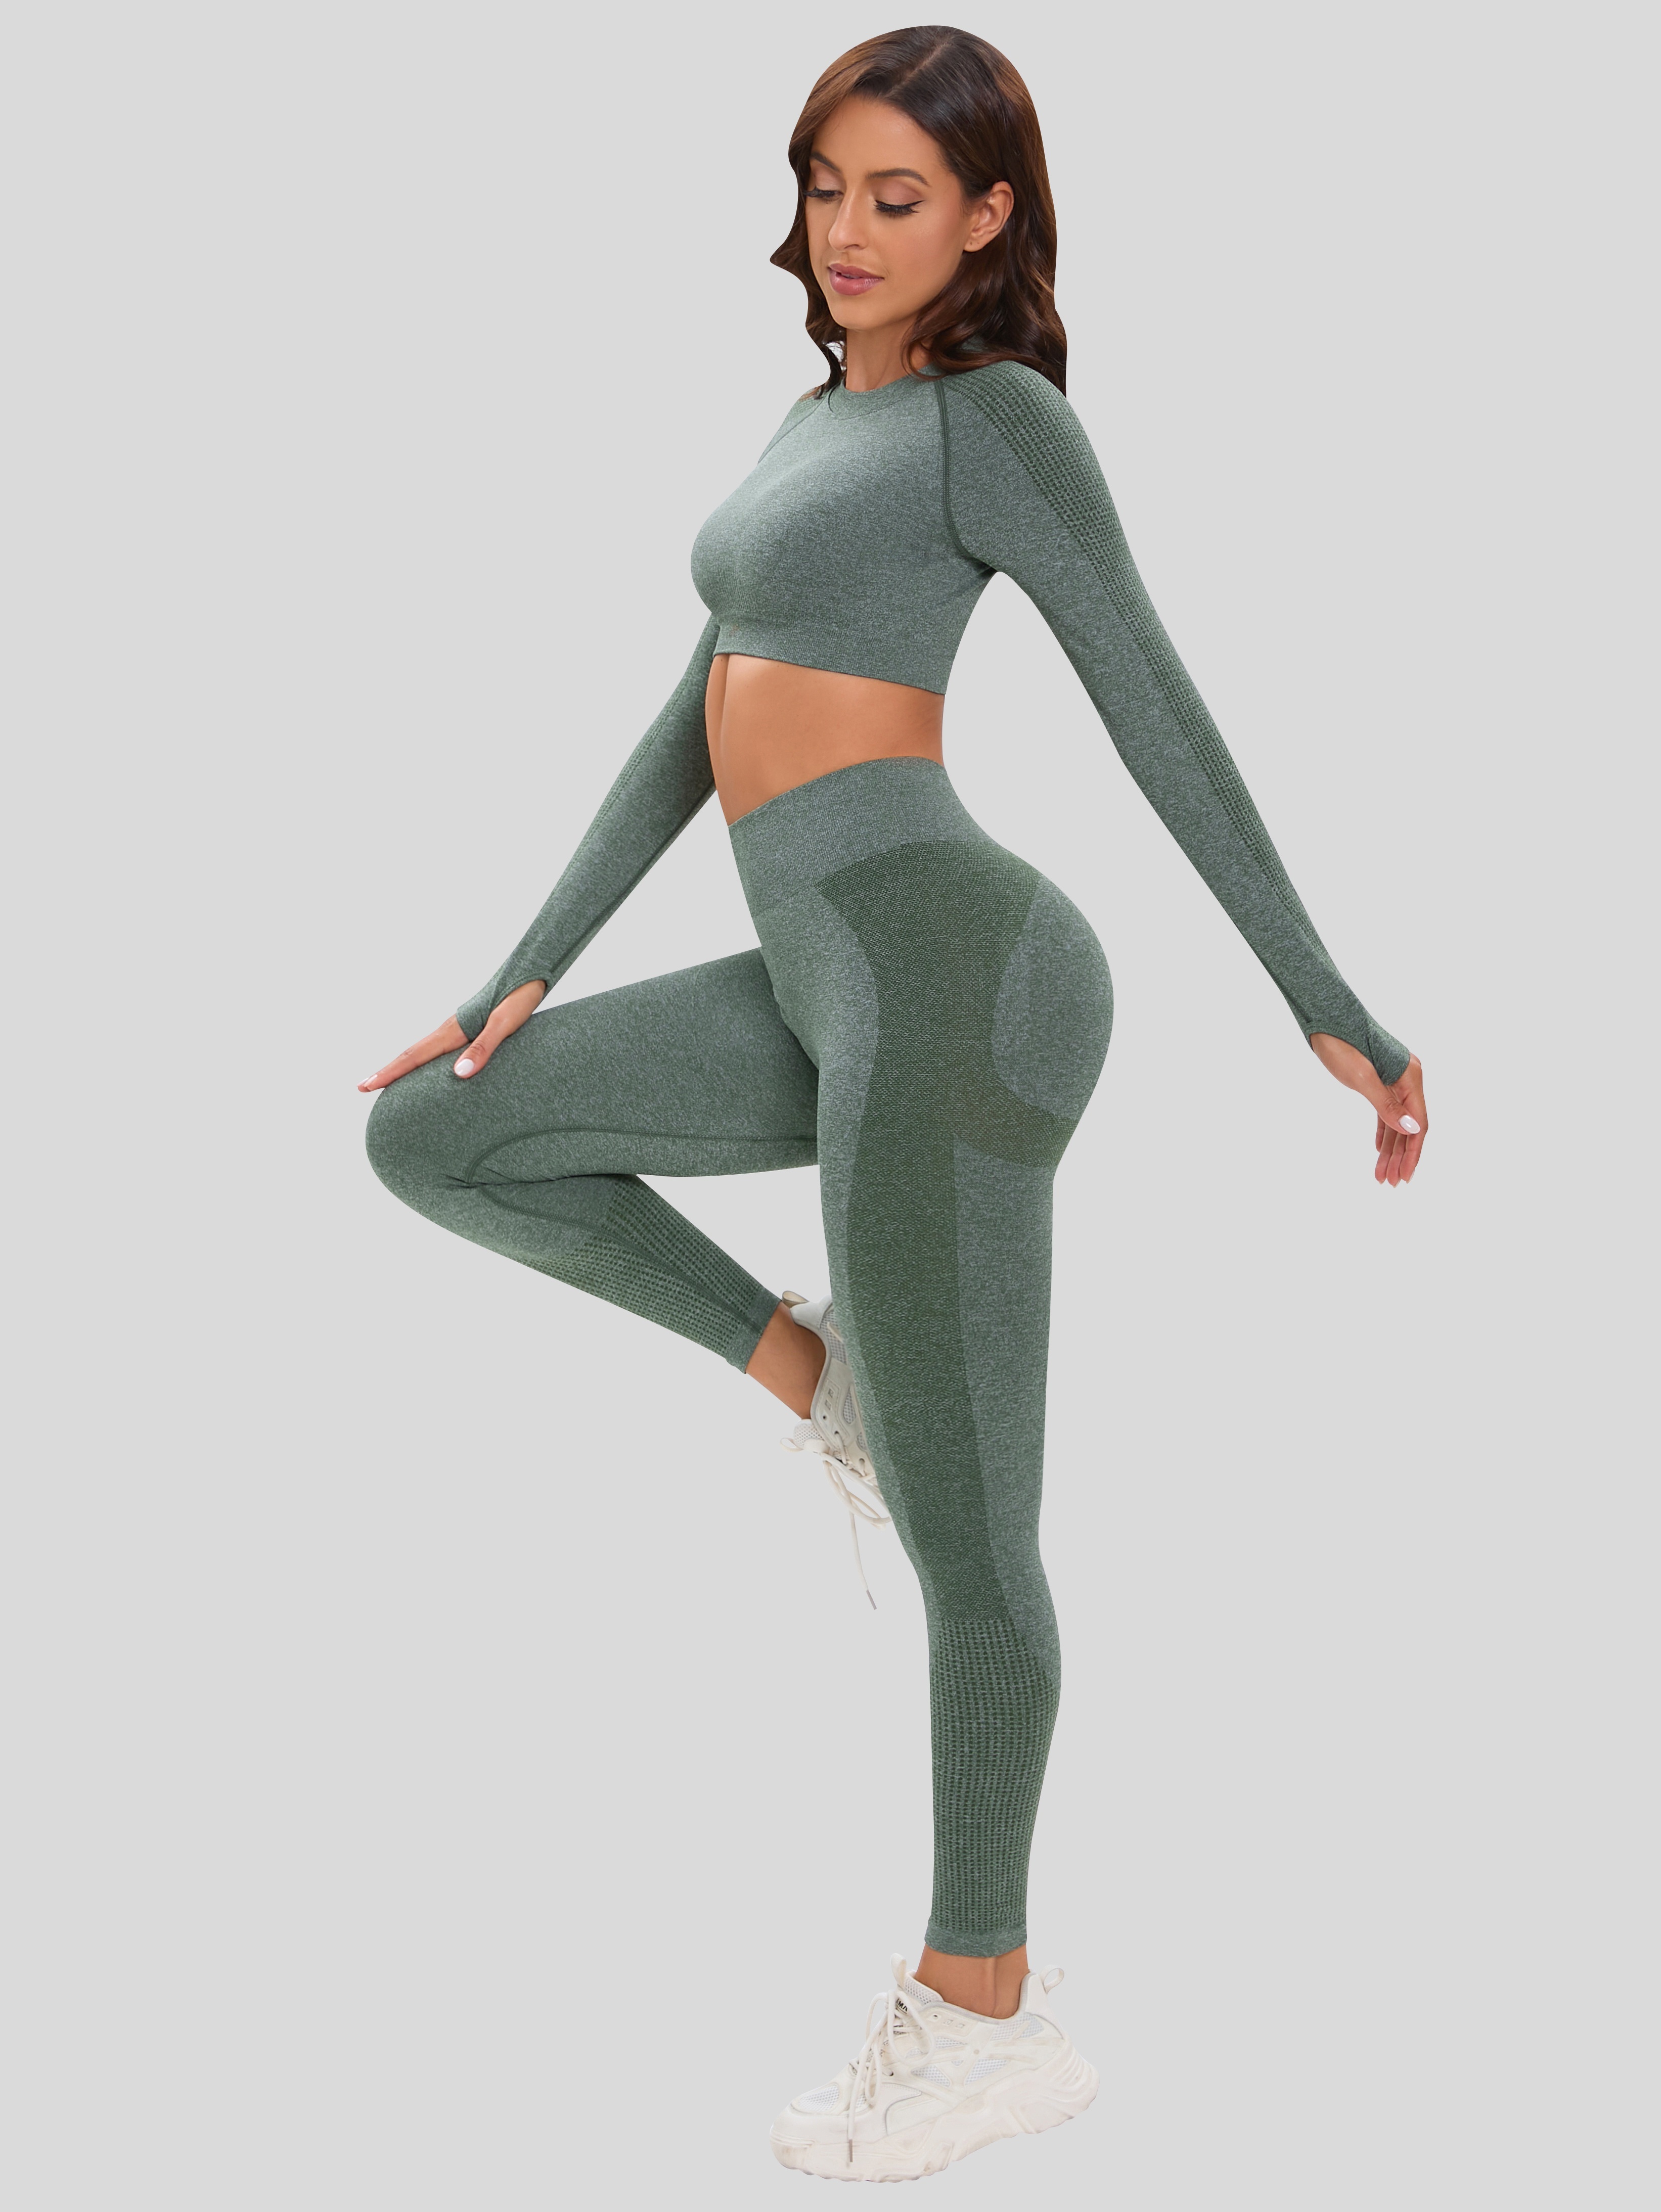 Women Sportswear Seamless Yoga Set Long Sleeve Yoga Tops High